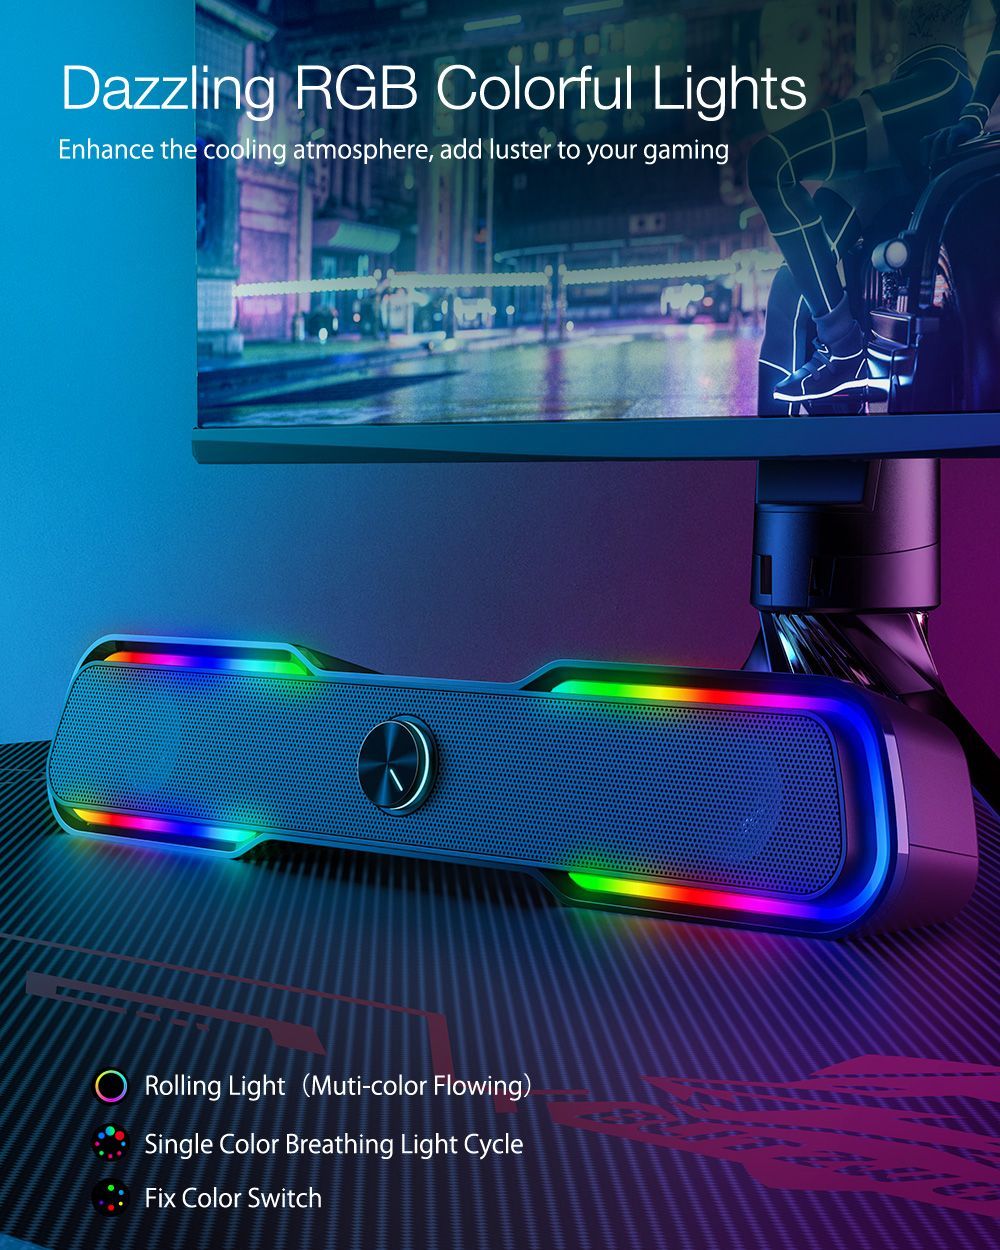 BlitzWolfreg-BW-GS1-Computer-Game-Speaker-with-20-Channel-System-bluetooth-RGB-Light-Stylish-Design--1762147